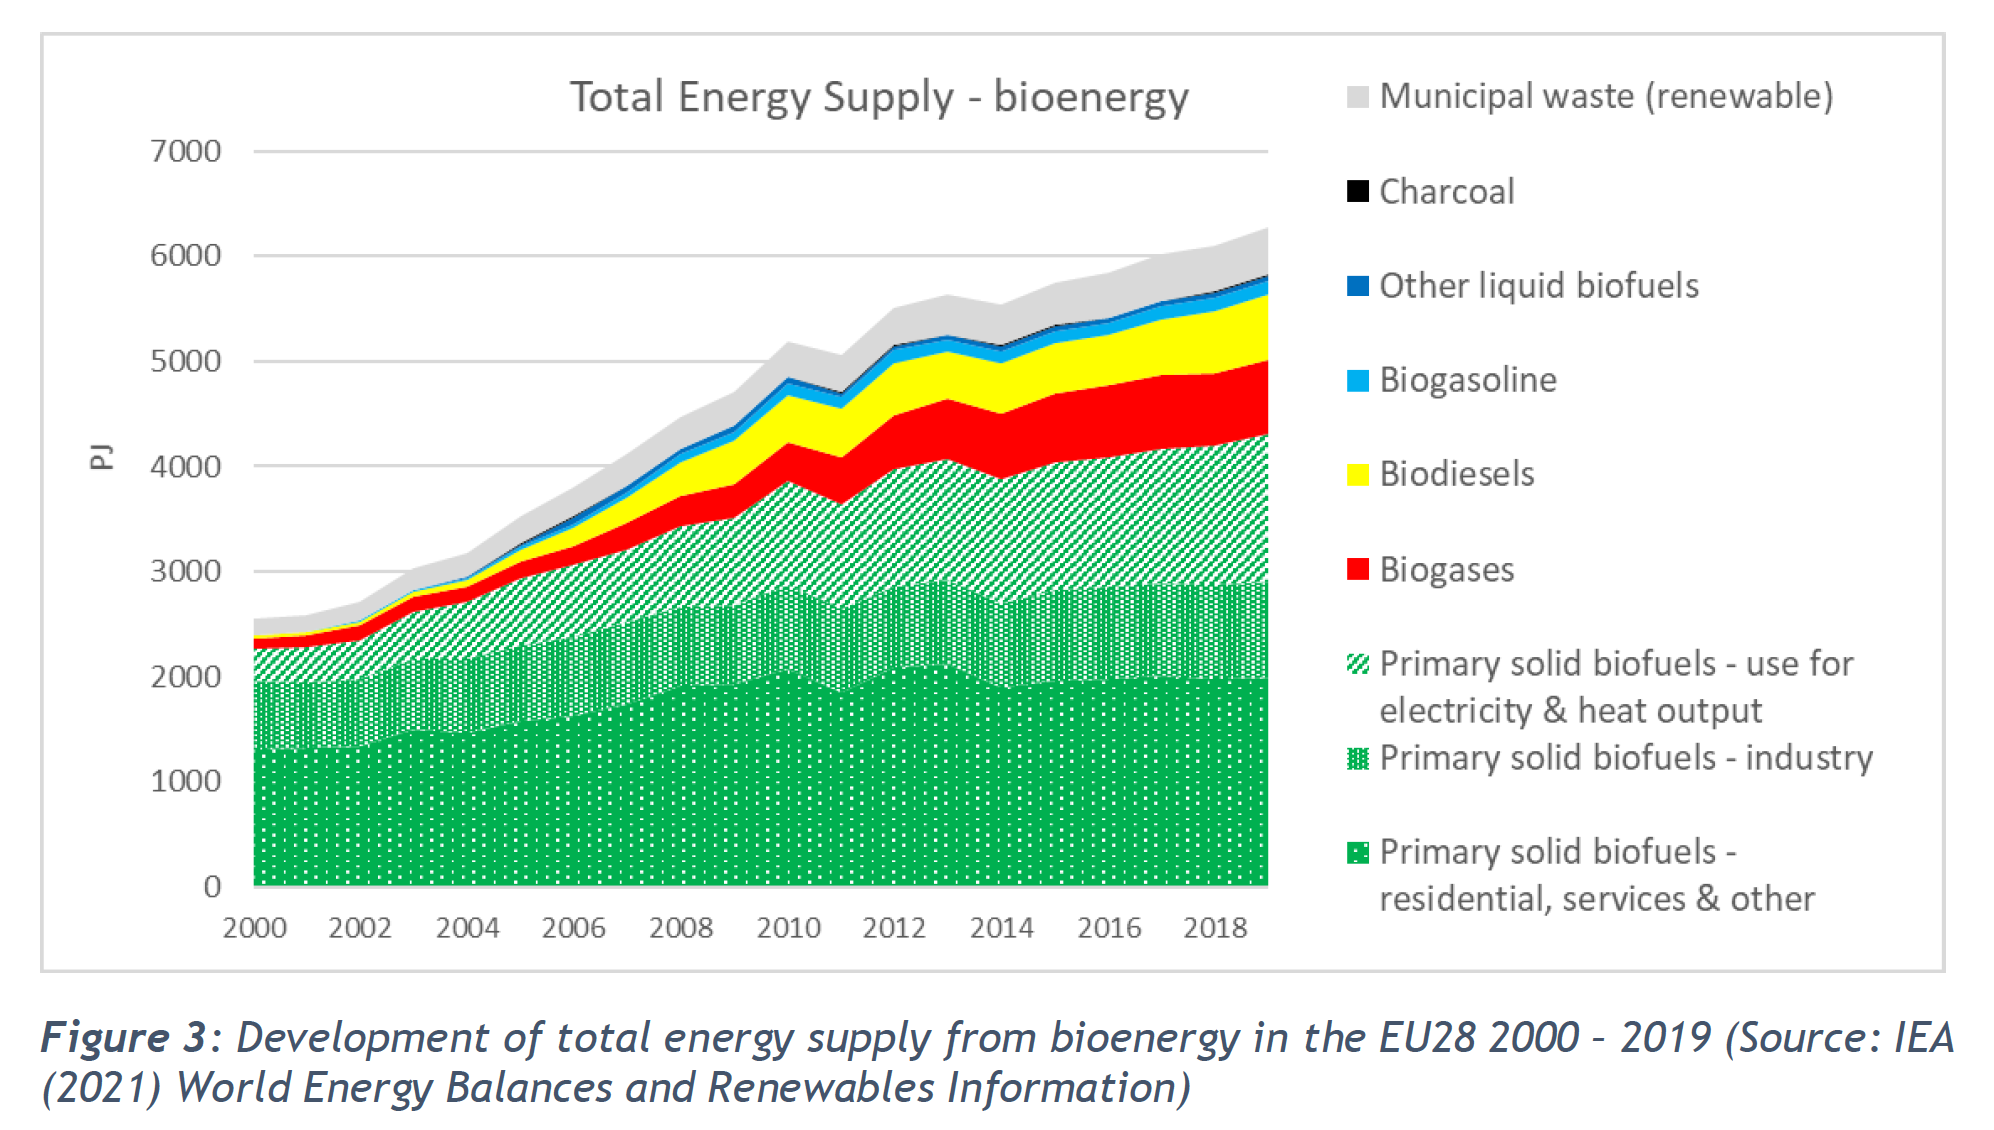 Bioenergy in total energy supply in the EU 